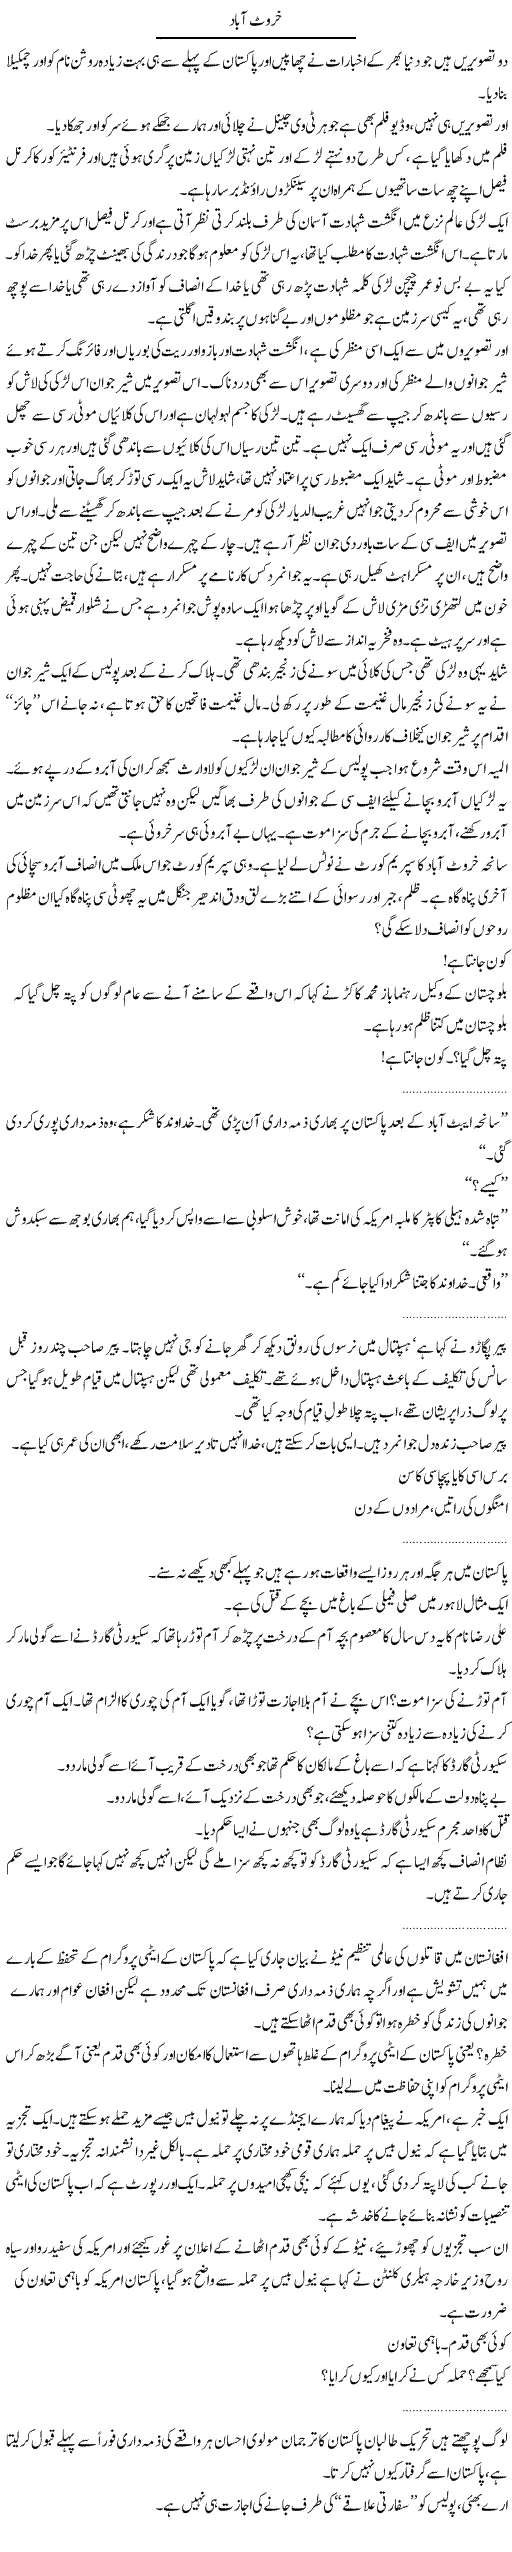 Quetta Deaths Express Column Abdullah Tariq 26 May 2011